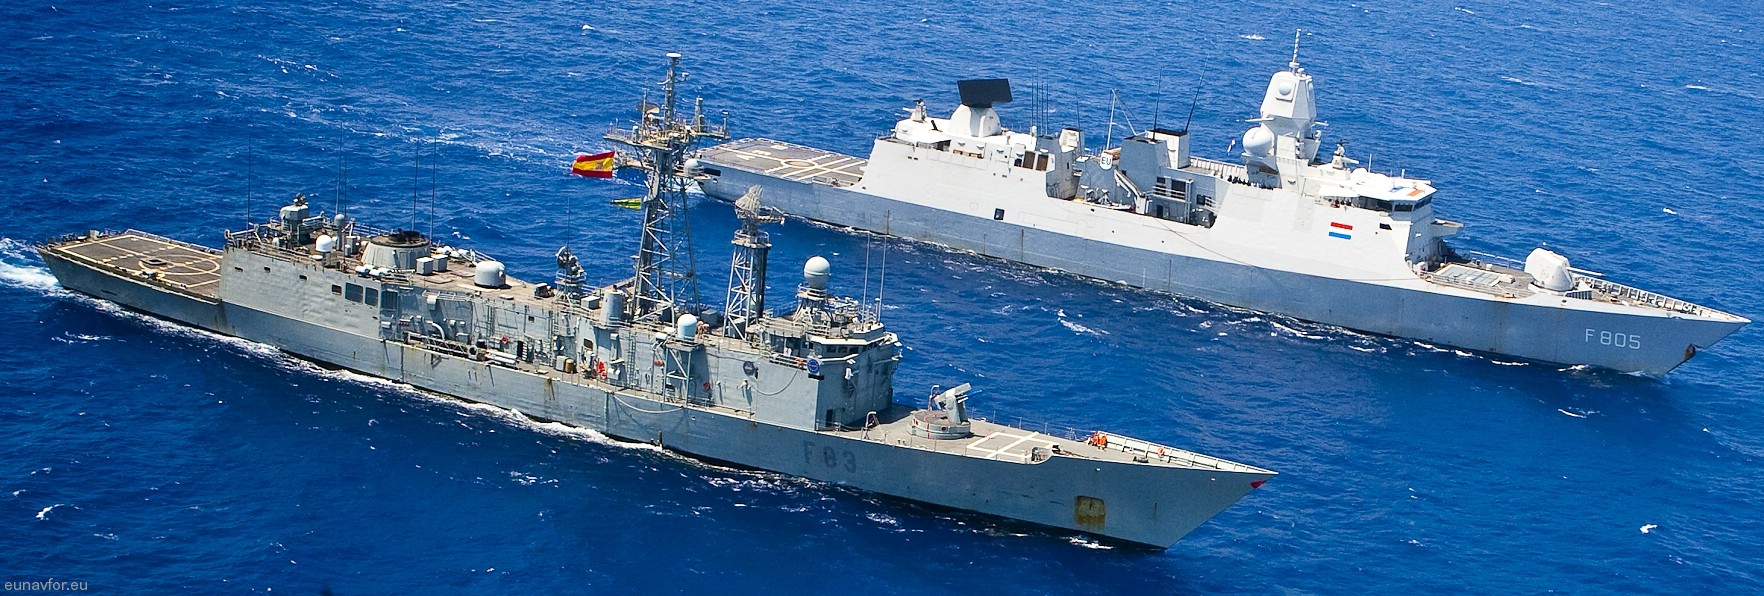 f-83 sps numancia f80 santa maria class guided missile frigate ffg spanish navy 03